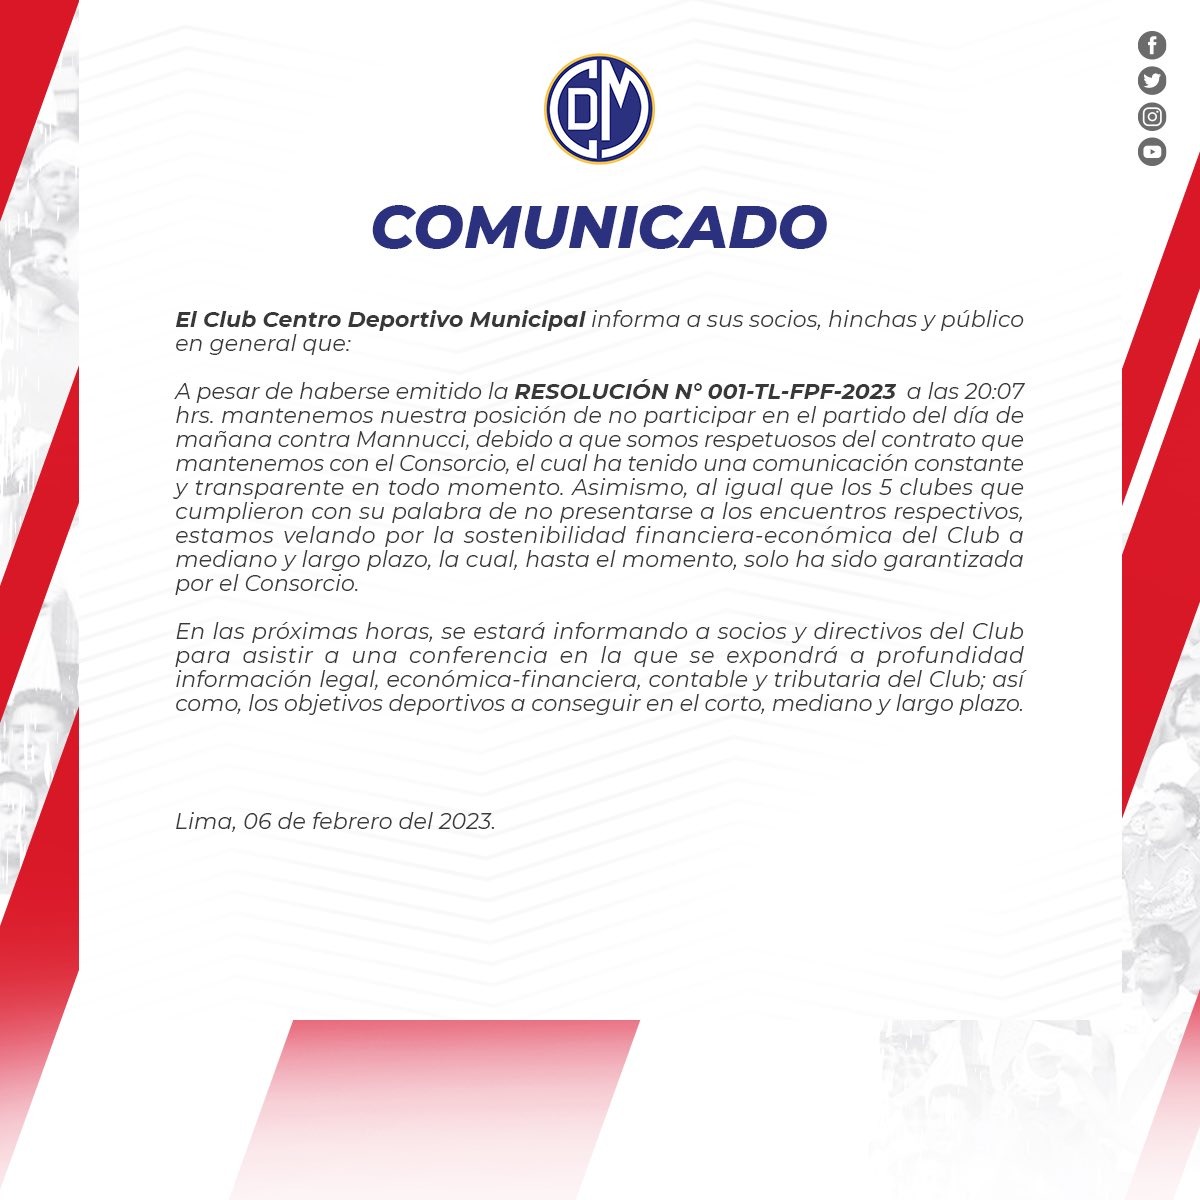 Comunicado del Club Deportivo Municipal